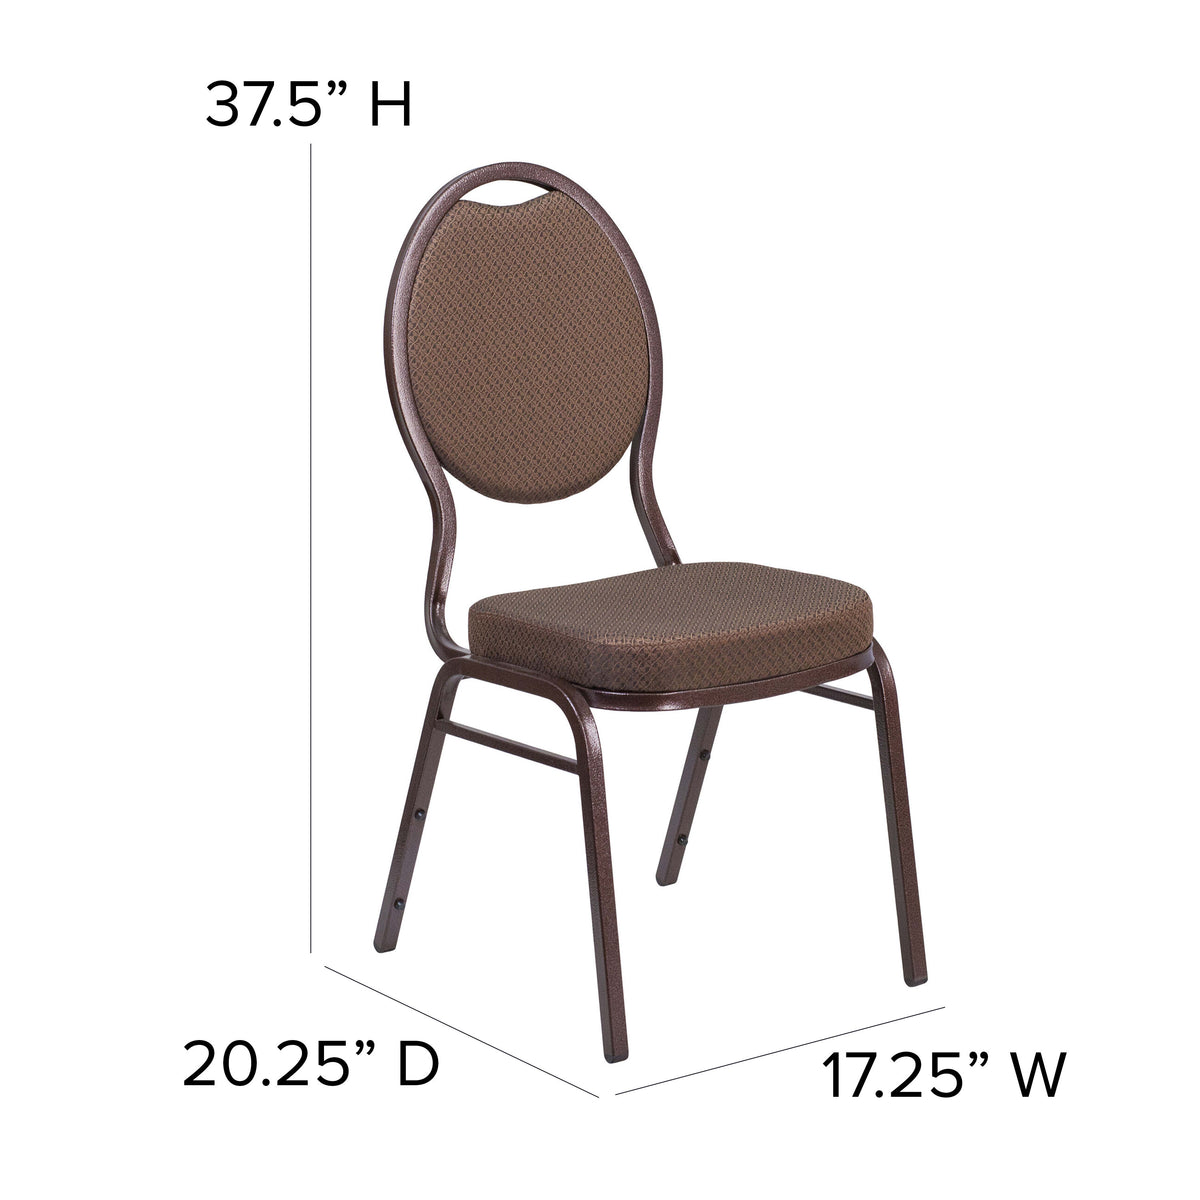 Brown Patterned Fabric/Copper Vein Frame |#| Teardrop Back Brown Patterned Fabric Stacking Banquet Chair - Copper Vein Frame